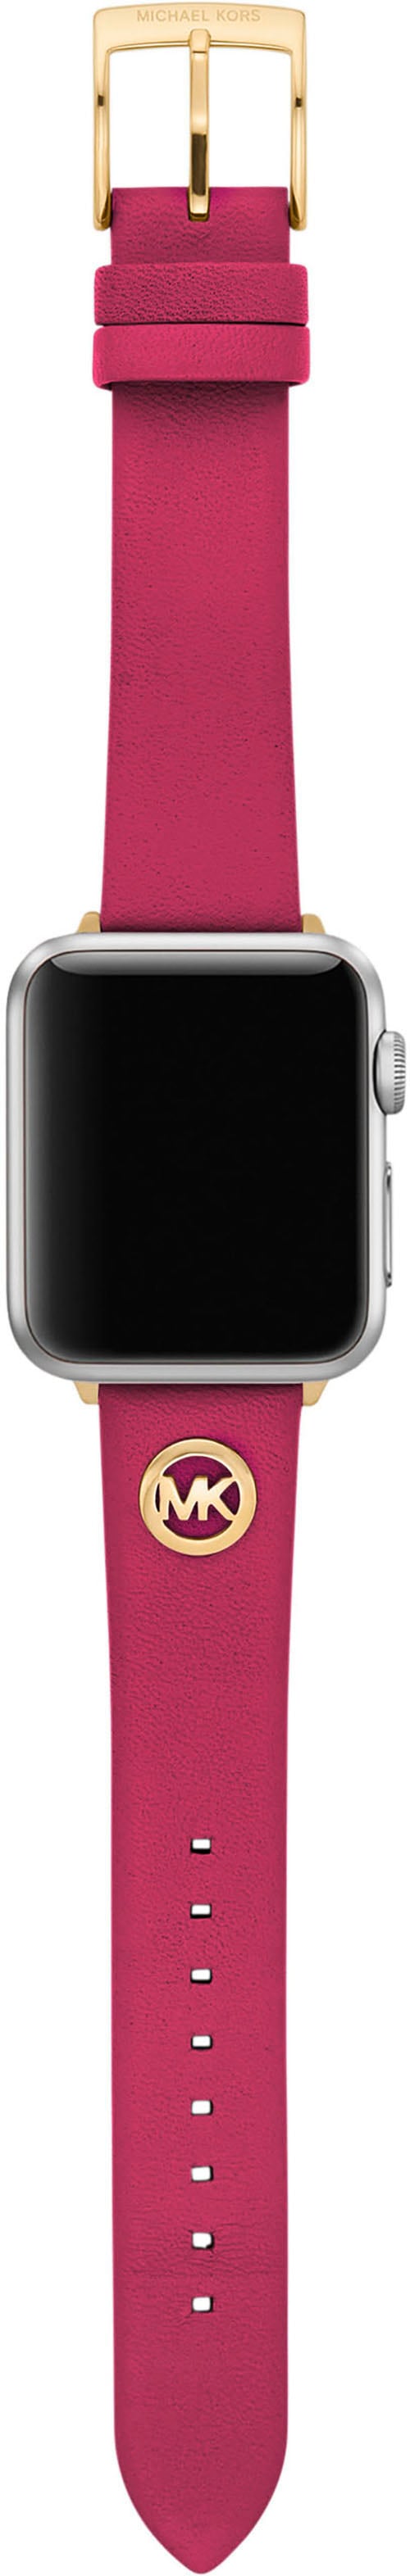 MICHAEL KORS Smartwatch-Armband »Bands for APPLE WATCH, MKS8061E«, Wechselband, Ersatzband, passend für die Apple Watch, Leder